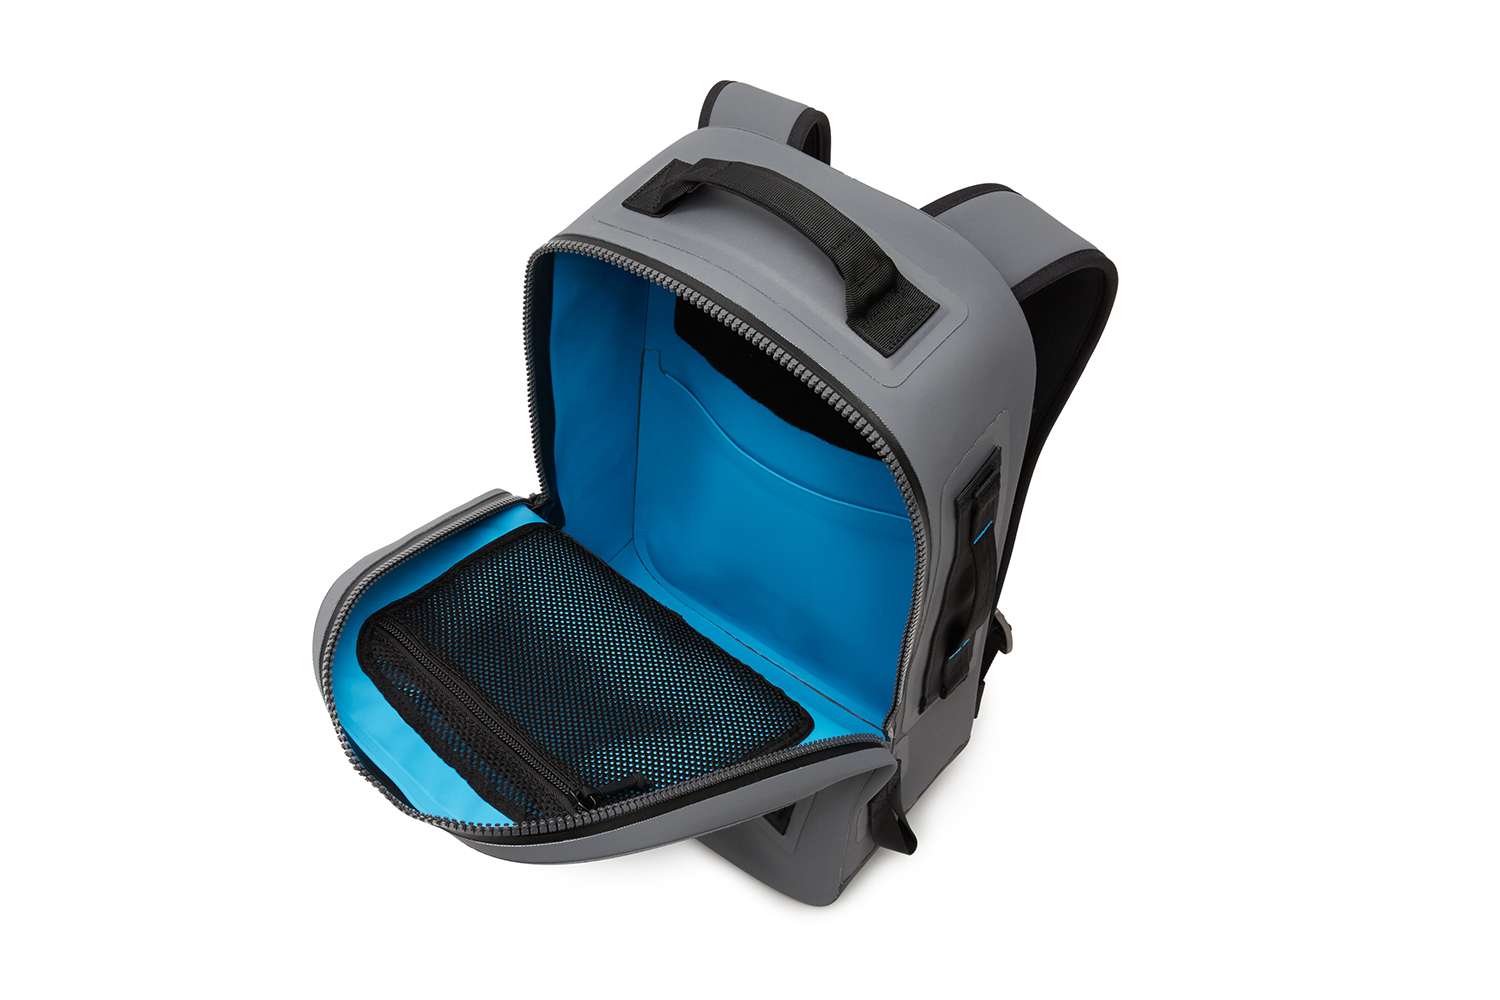 YETI - Introducing the SideKick Dry. This waterproof gear case is